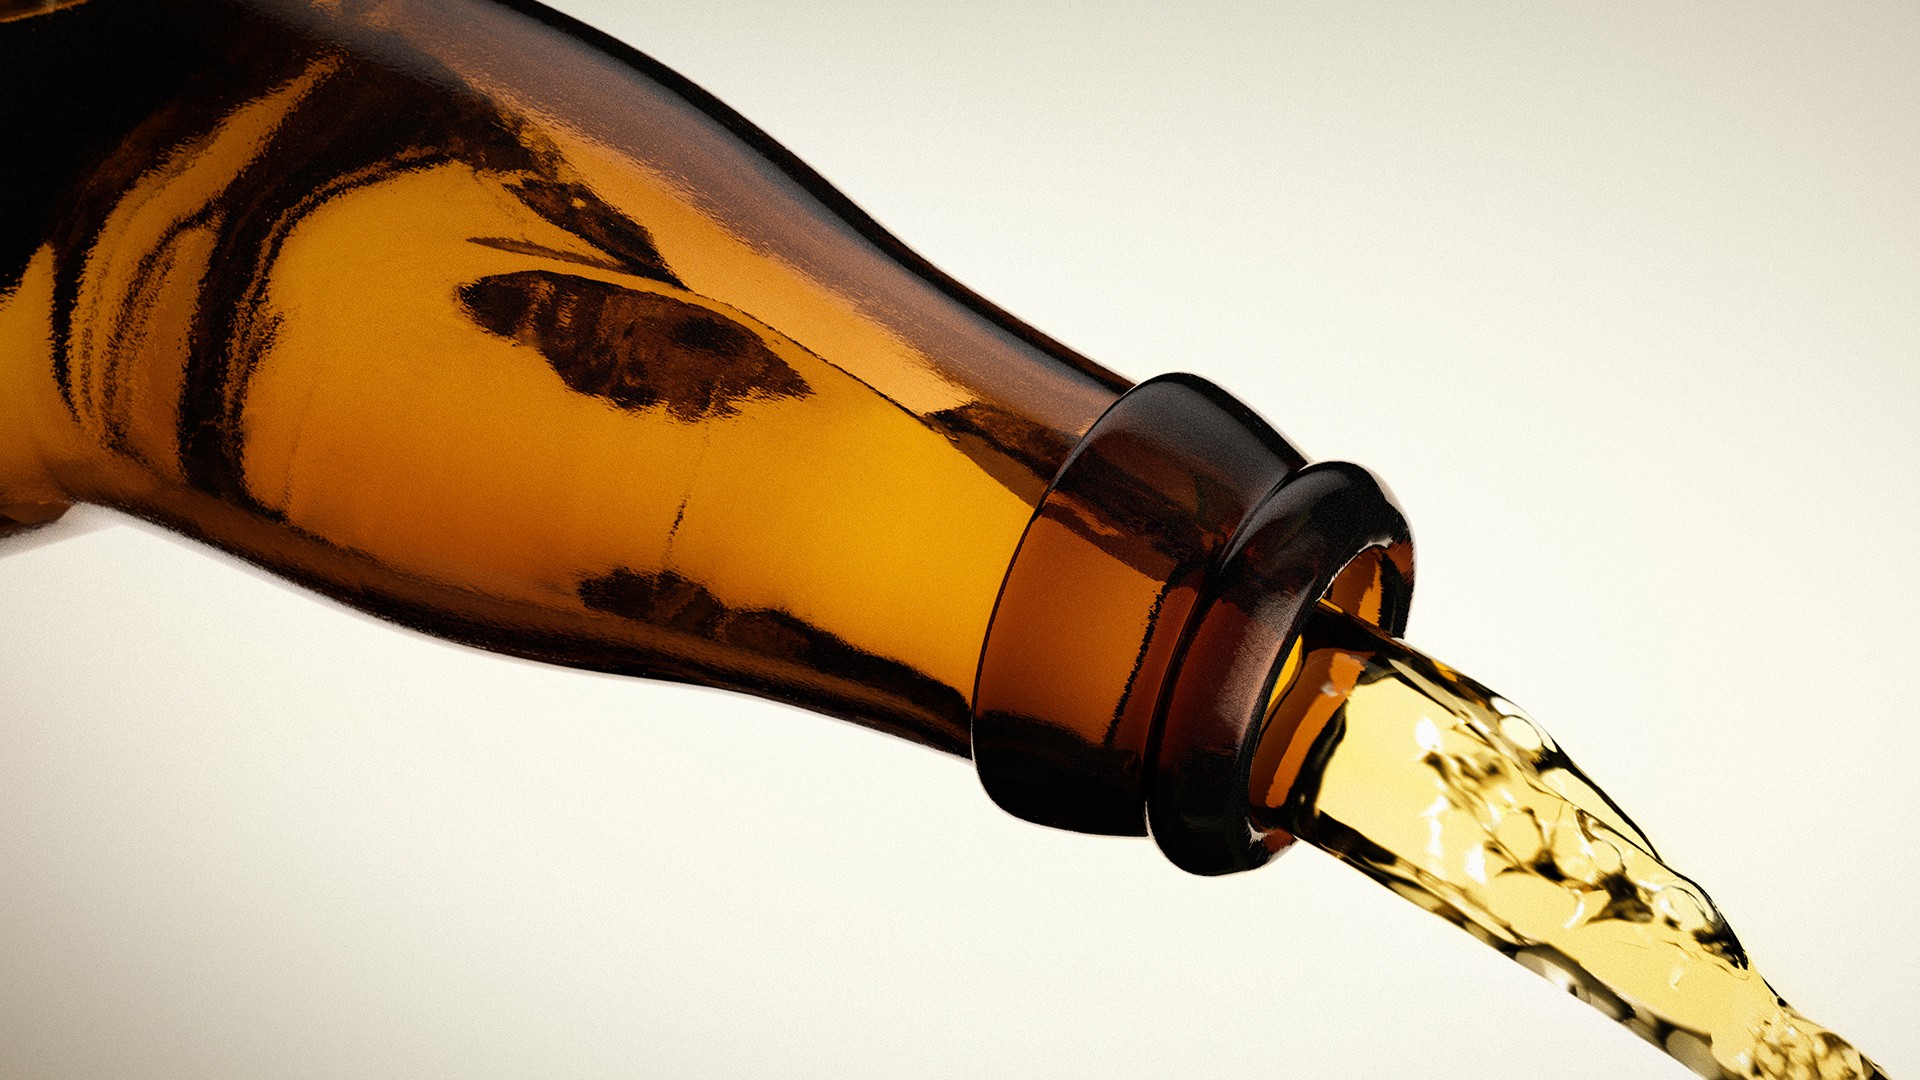 General 1920x1080 bottles simple background alcohol beer macro brown beige background liquid food closeup